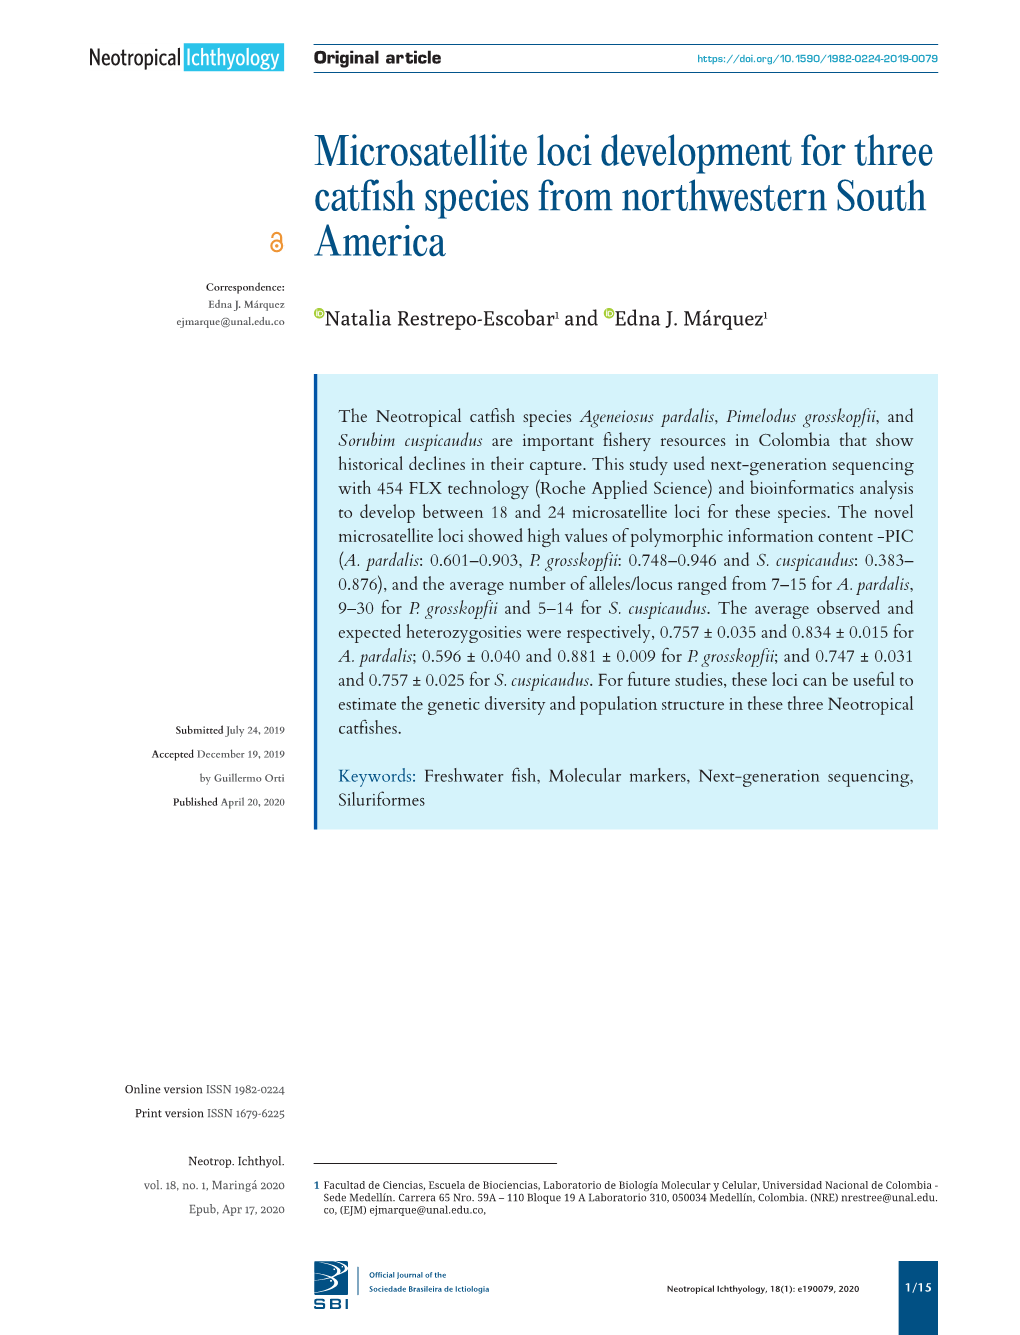 Microsatellite Loci Development for Three Catfish Species from Northwestern South America